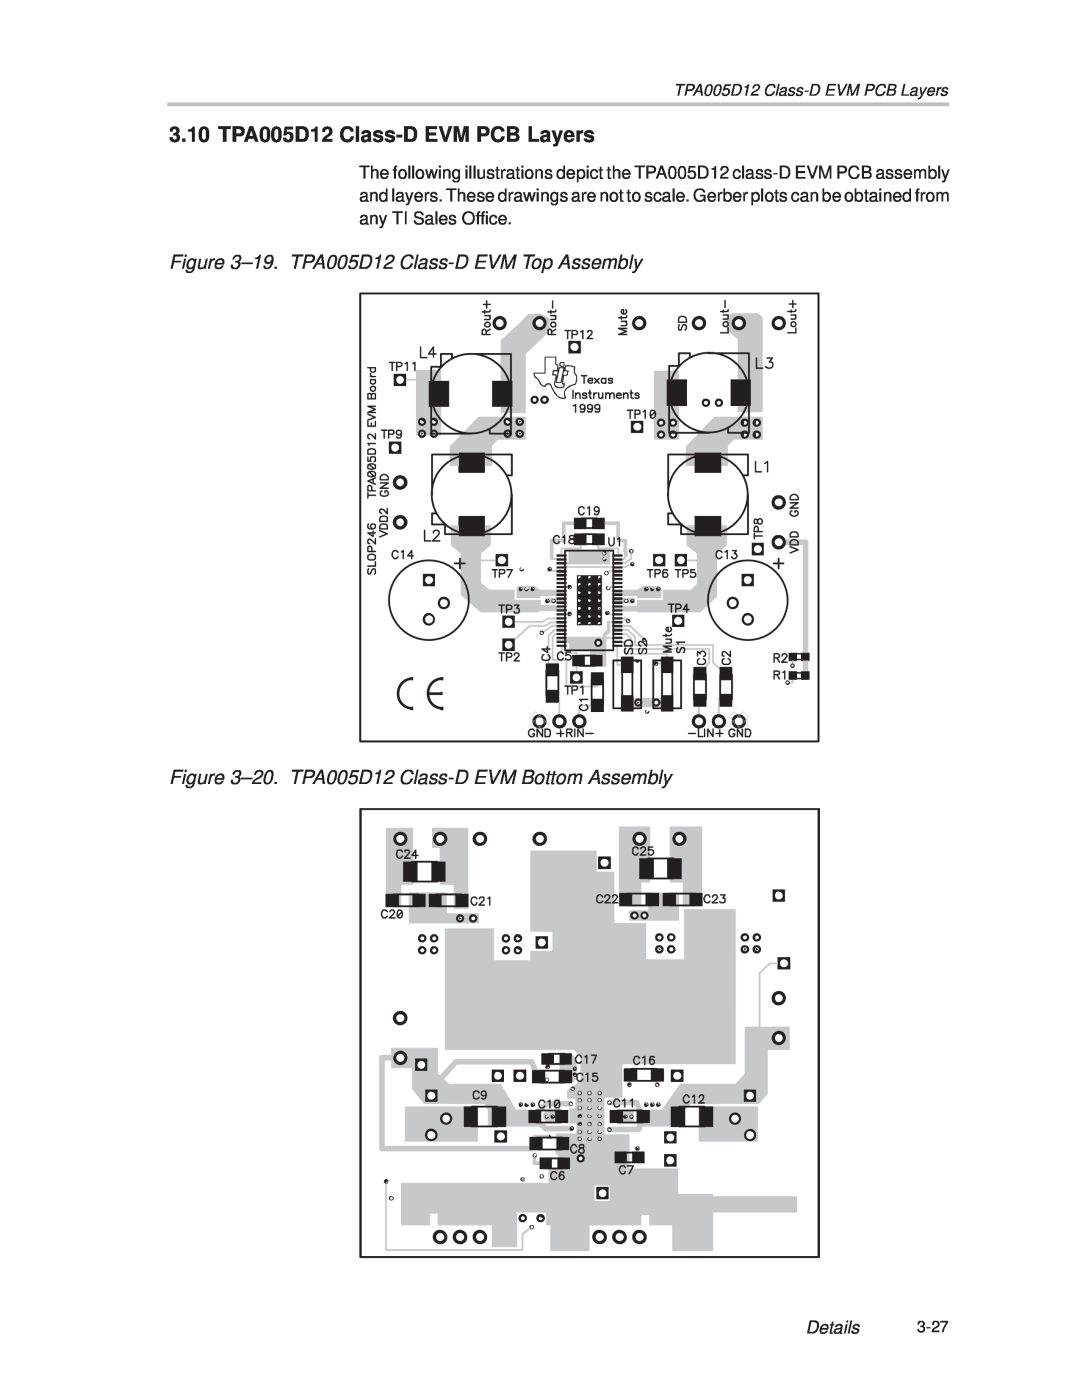 Texas Instruments manual 3.10 TPA005D12 Class-DEVM PCB Layers, ±19. TPA005D12 Class-DEVM Top Assembly, Details 